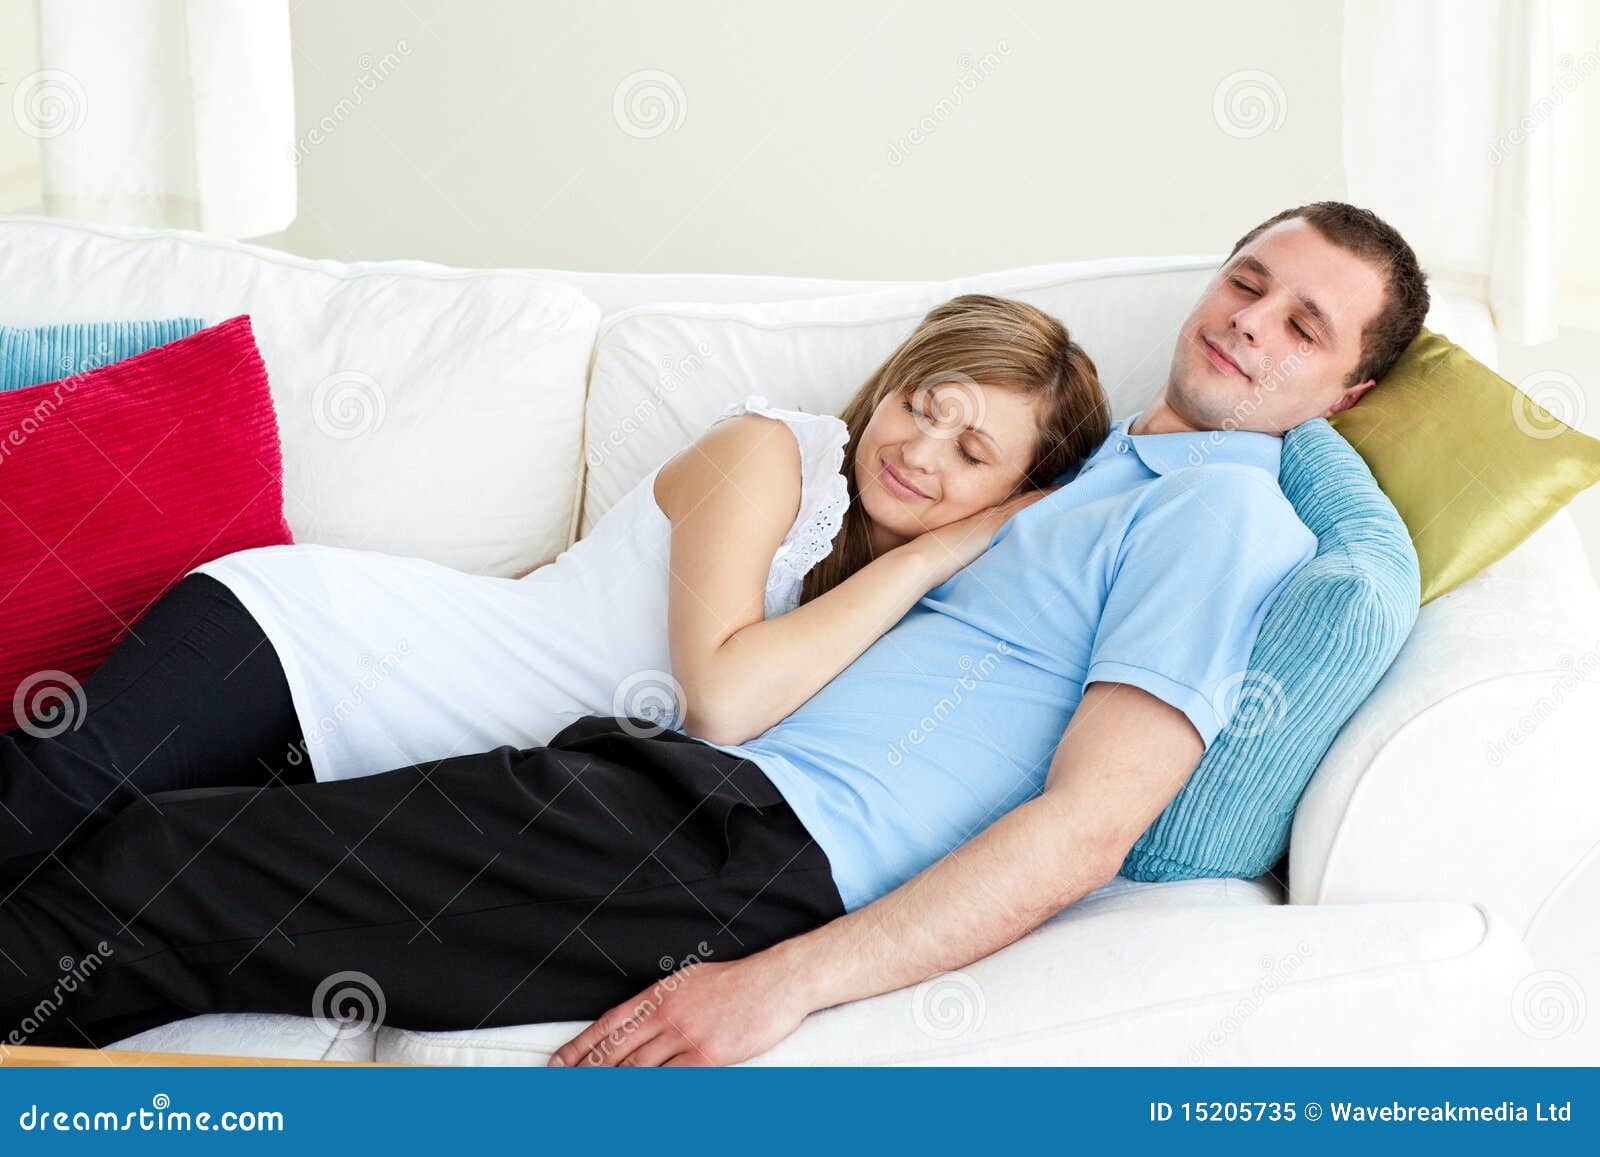 Мужчина общается с девицей и трахает ее на диване